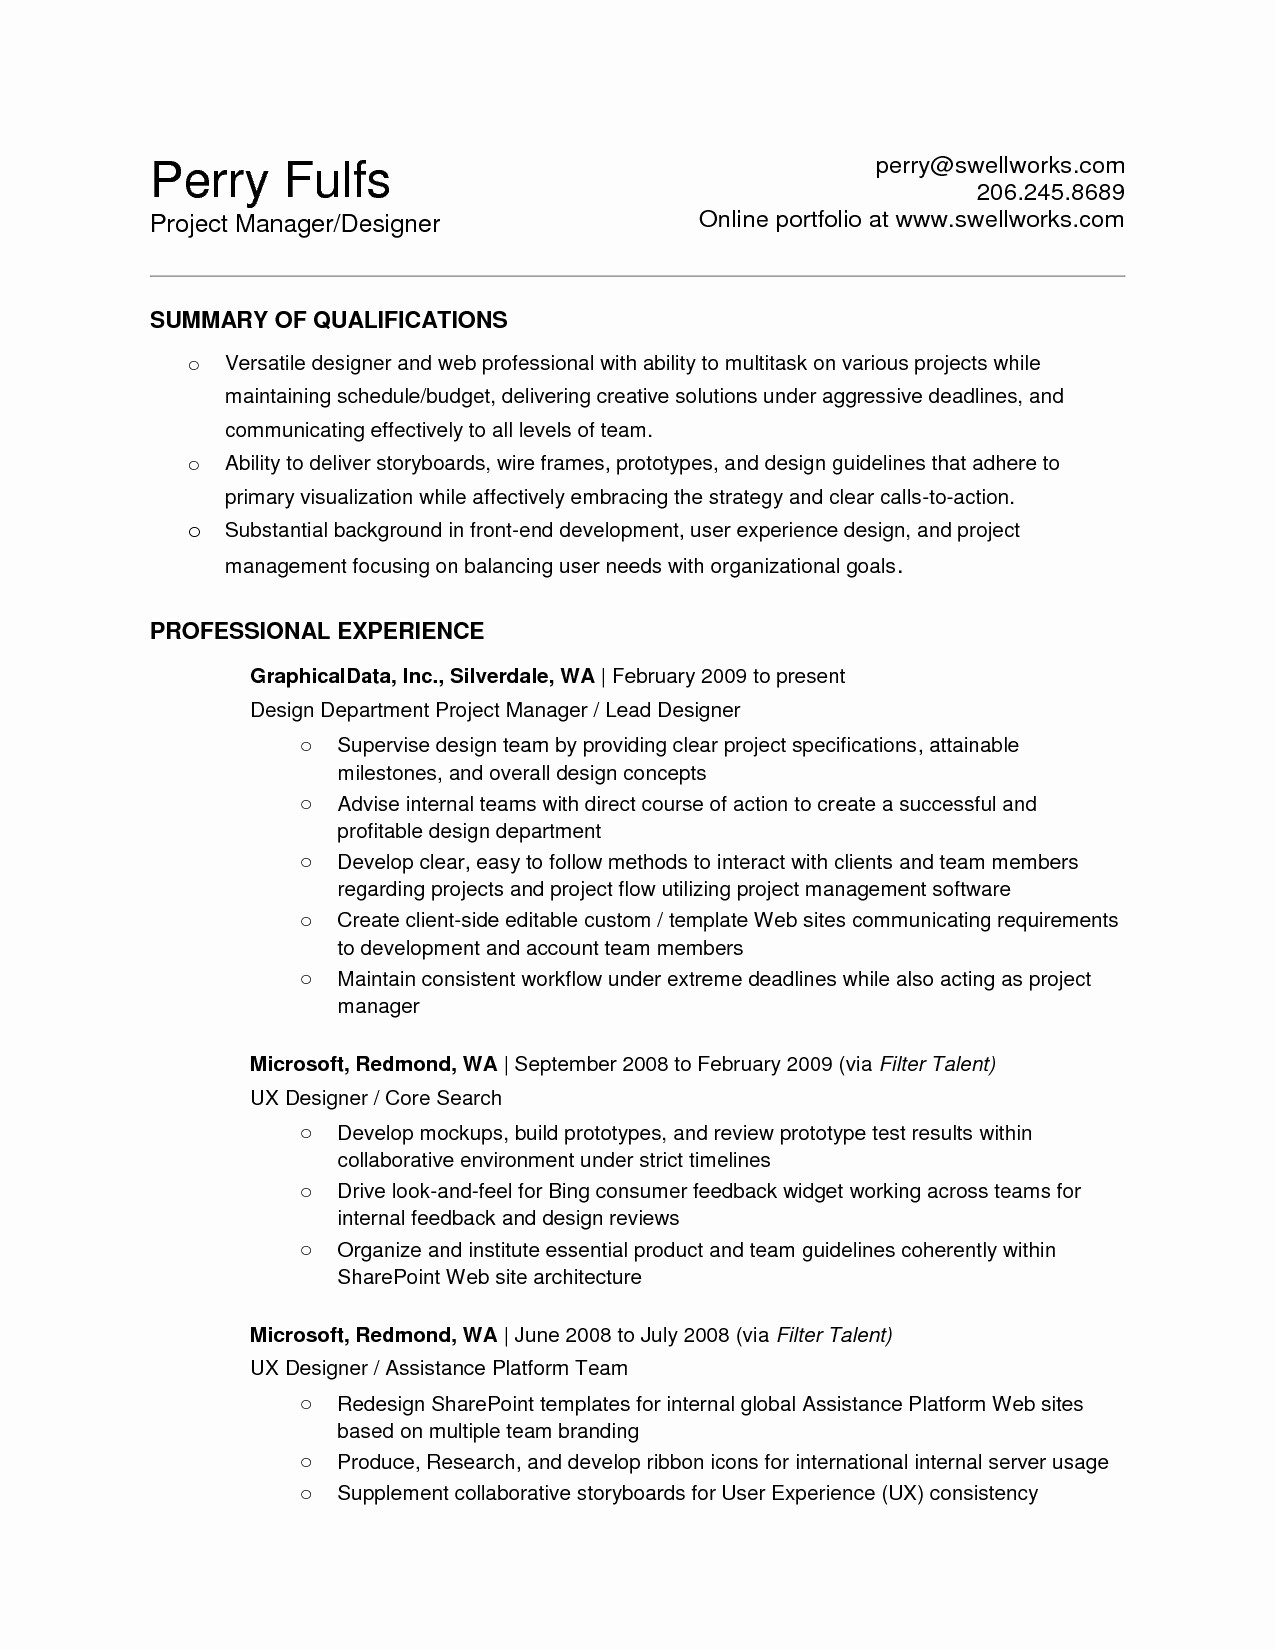 Resume Templates On Microsoft Word Inspirational Microsoft Resume Templates